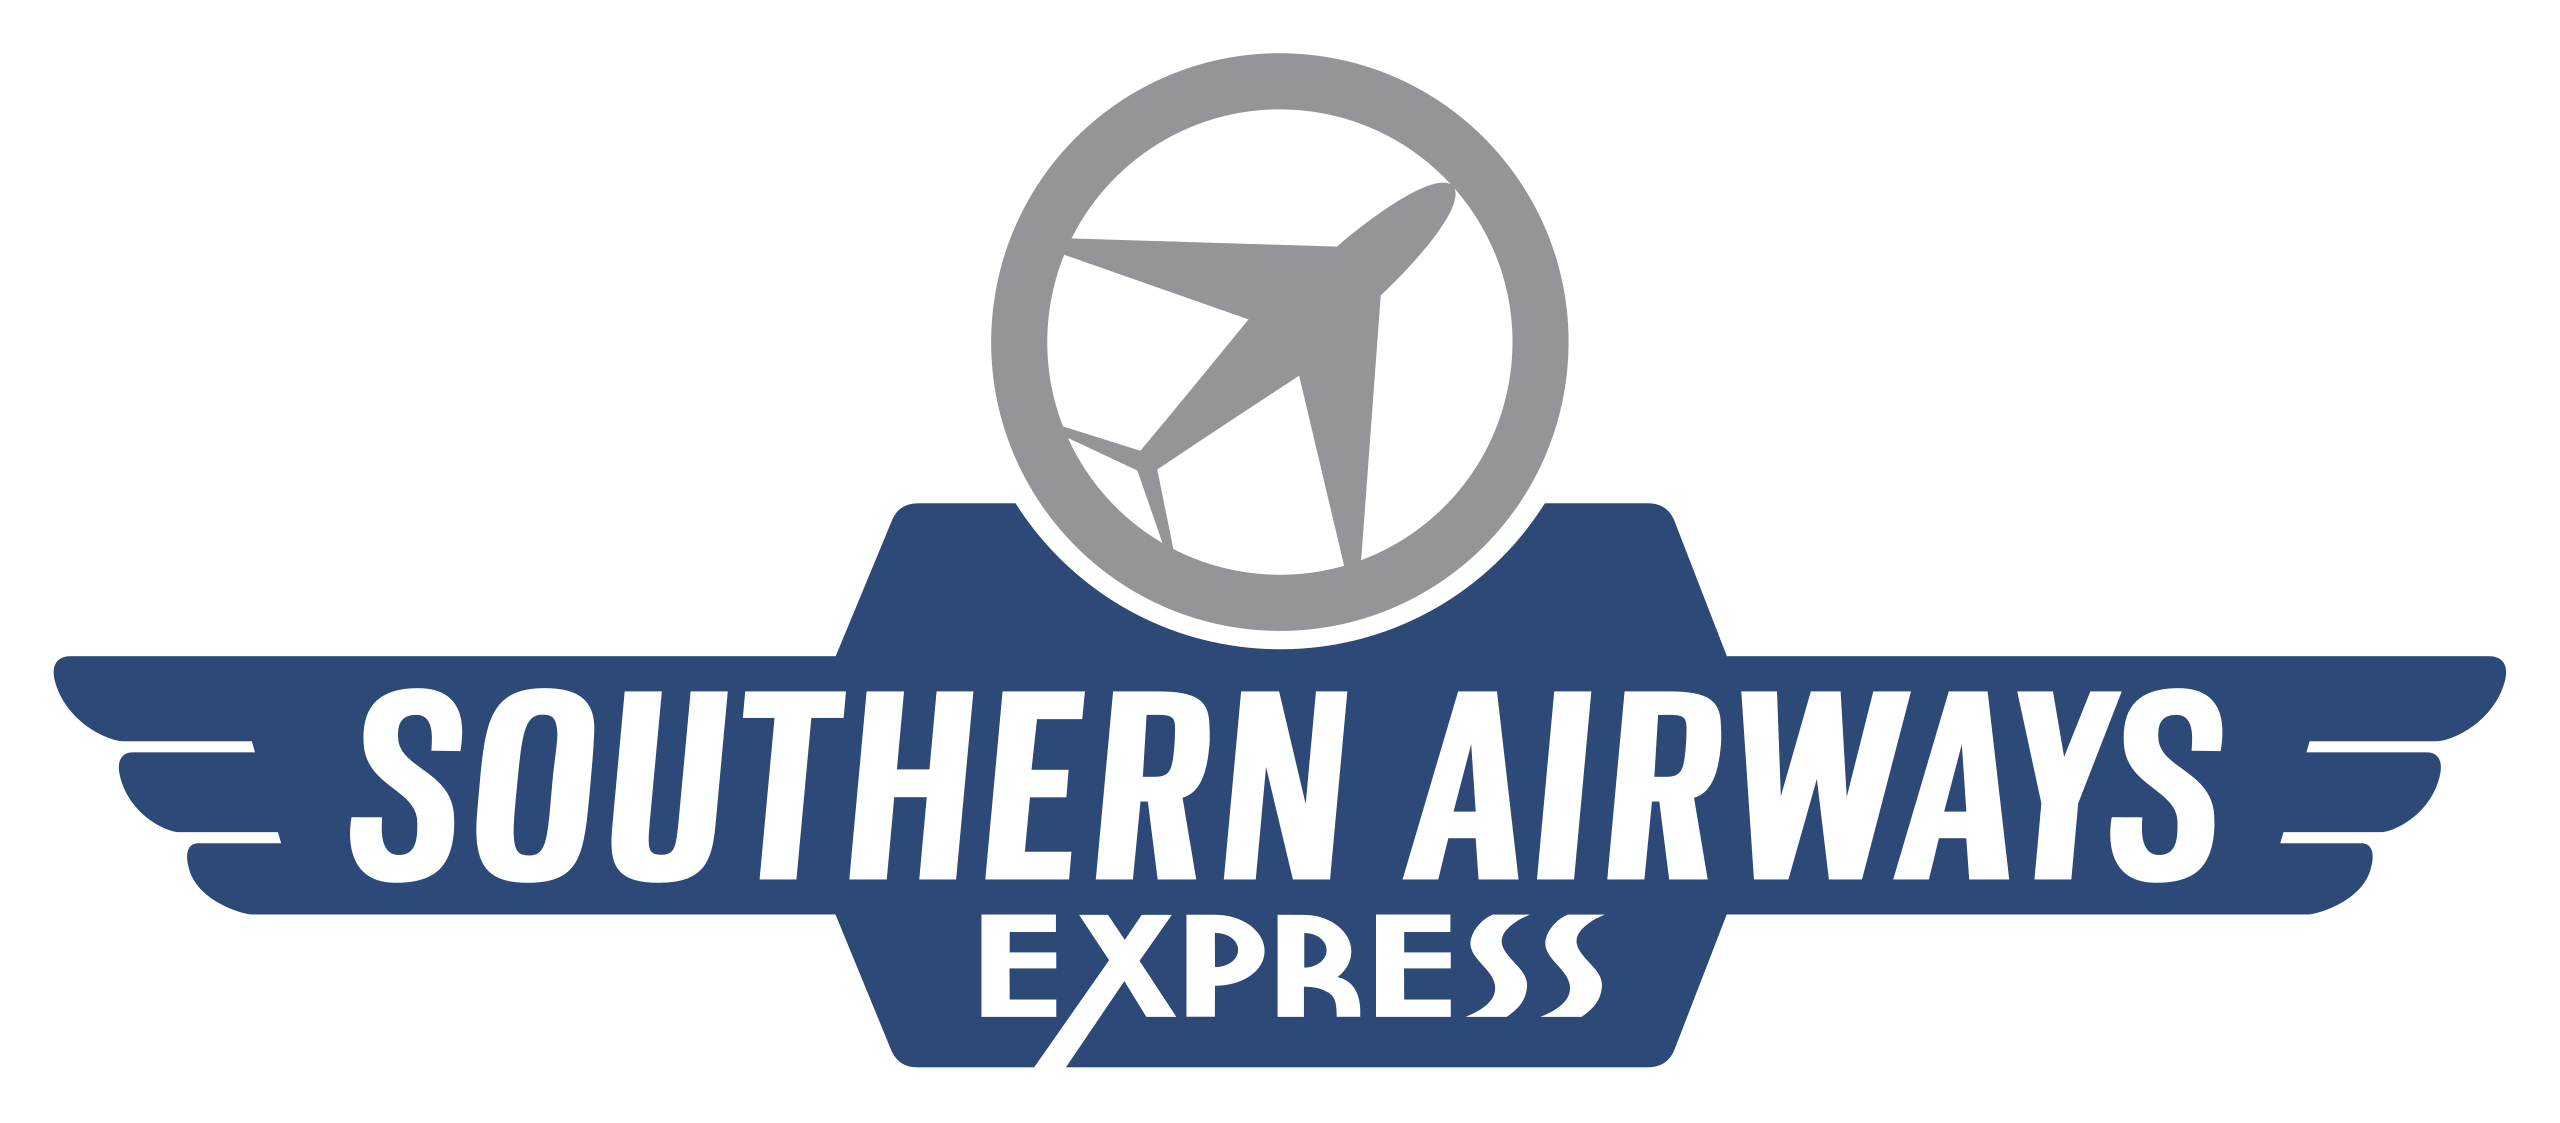 Southern_Airways_Express_logo.svg